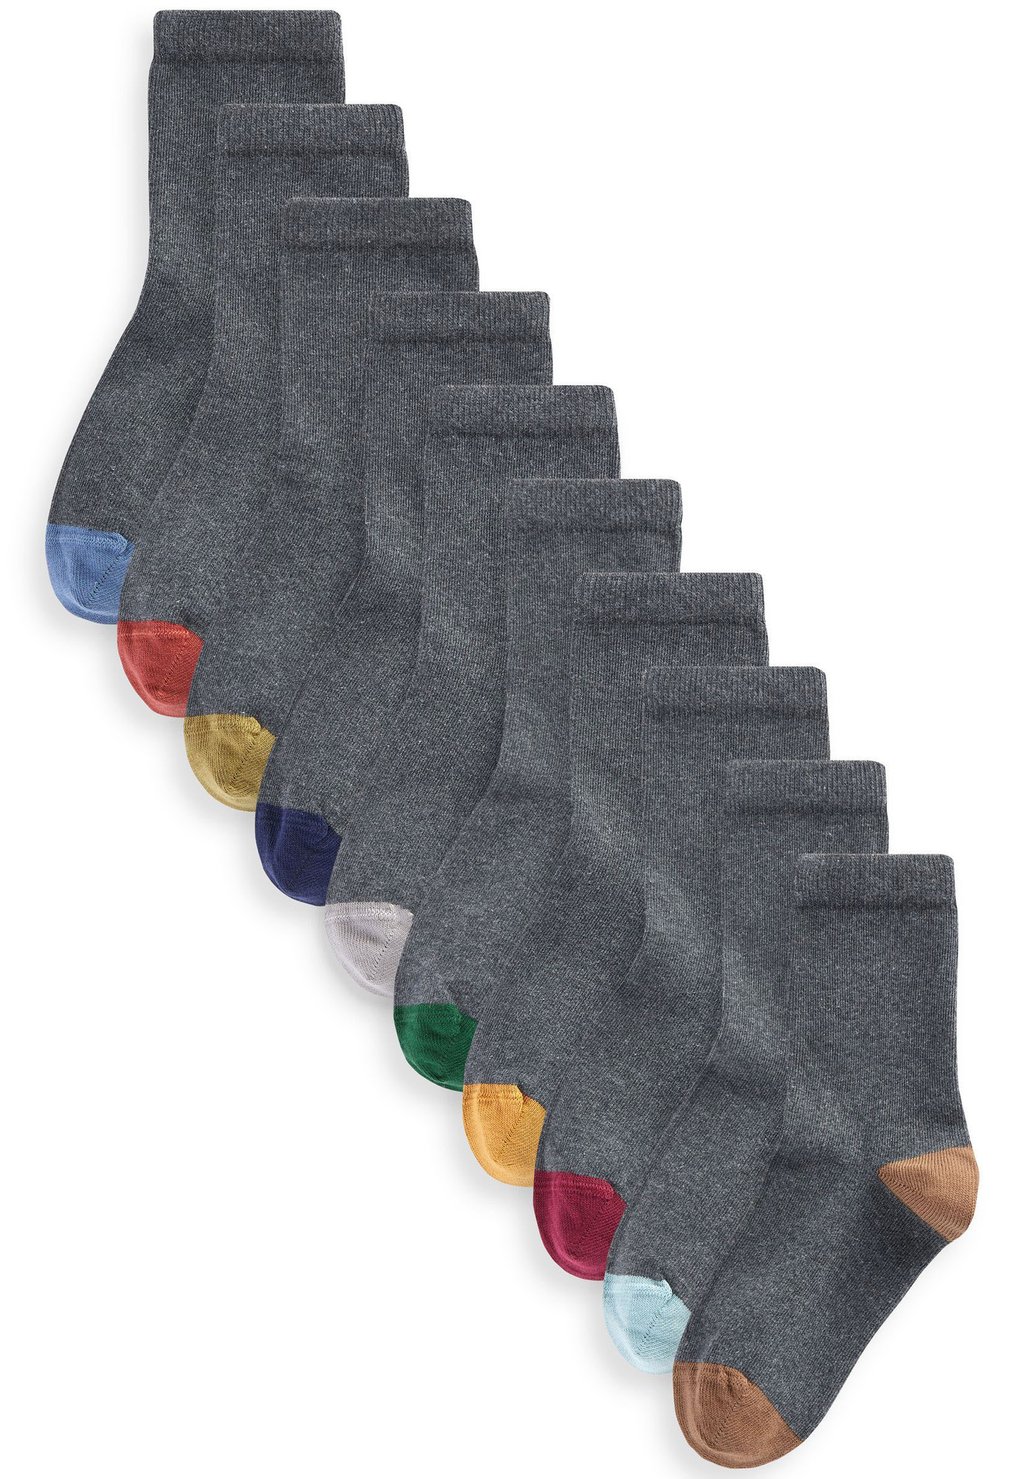 Носки 10 PACK Next, цвет grey with contrast heel and toe cotton mesh gel anti drying heel socks breathable and sweat absorbent heel protection moisturizing heel short socks